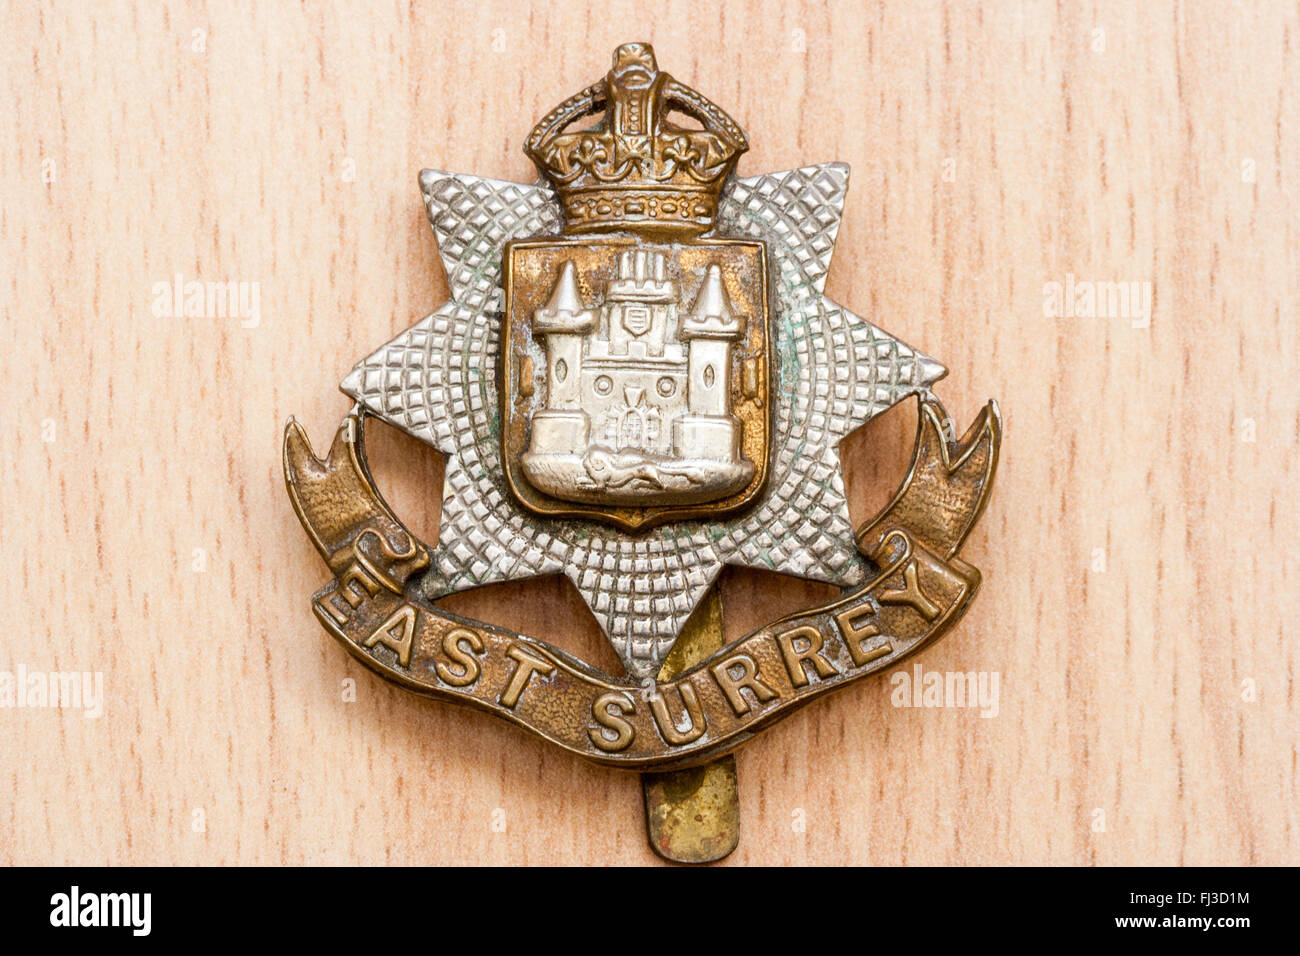 First world war, the great war. Regalia. East Surrey Regiment cap badge on wooden grain background. Stock Photo